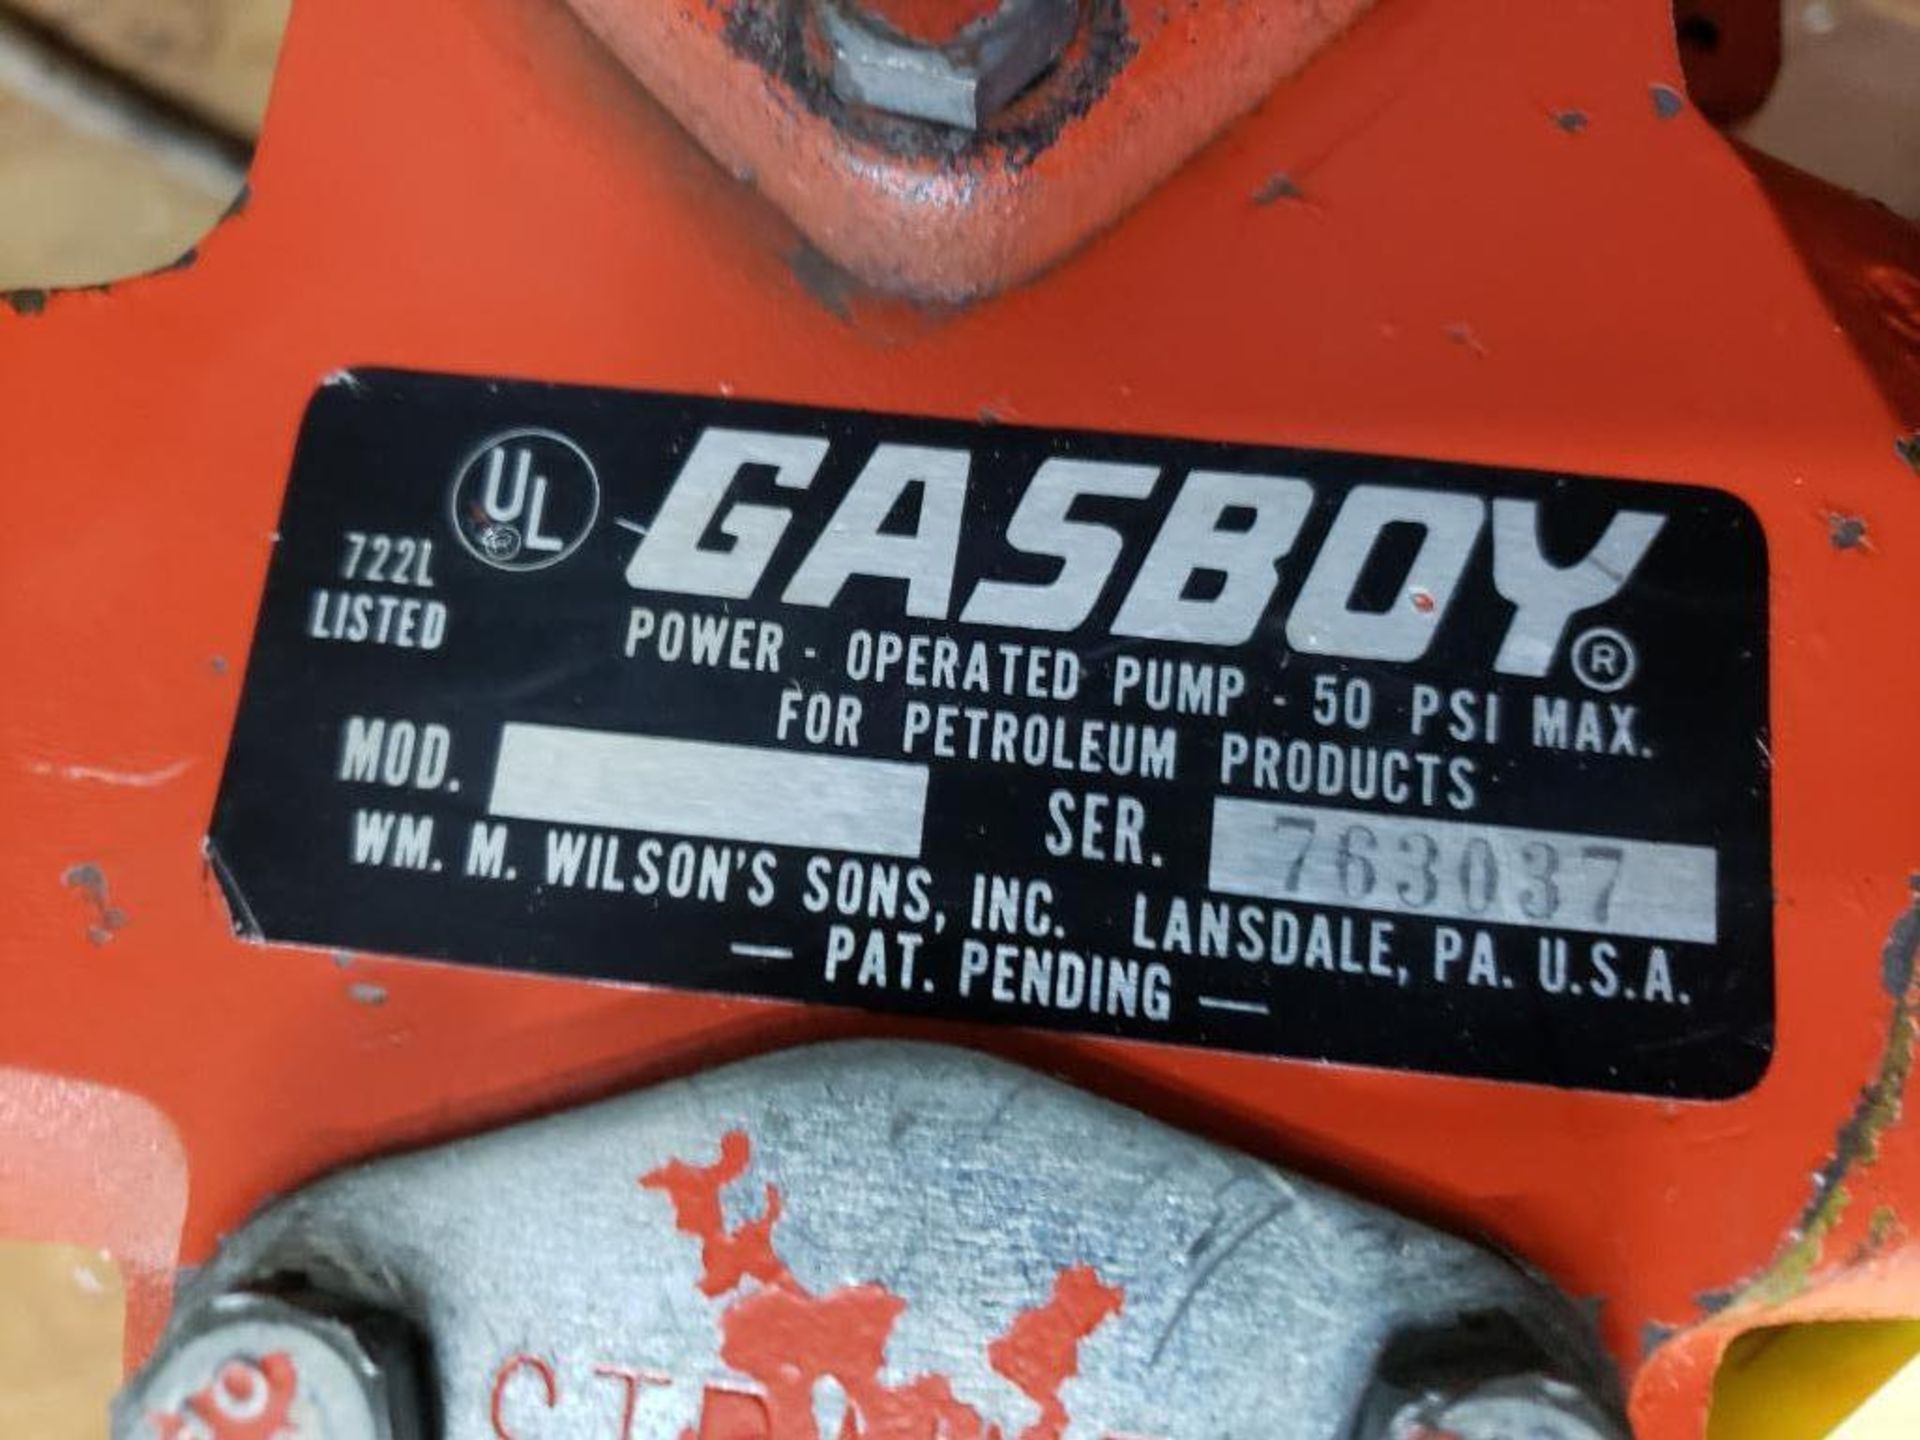 Gasboy power operatured pump. 50psi max. - Image 2 of 4